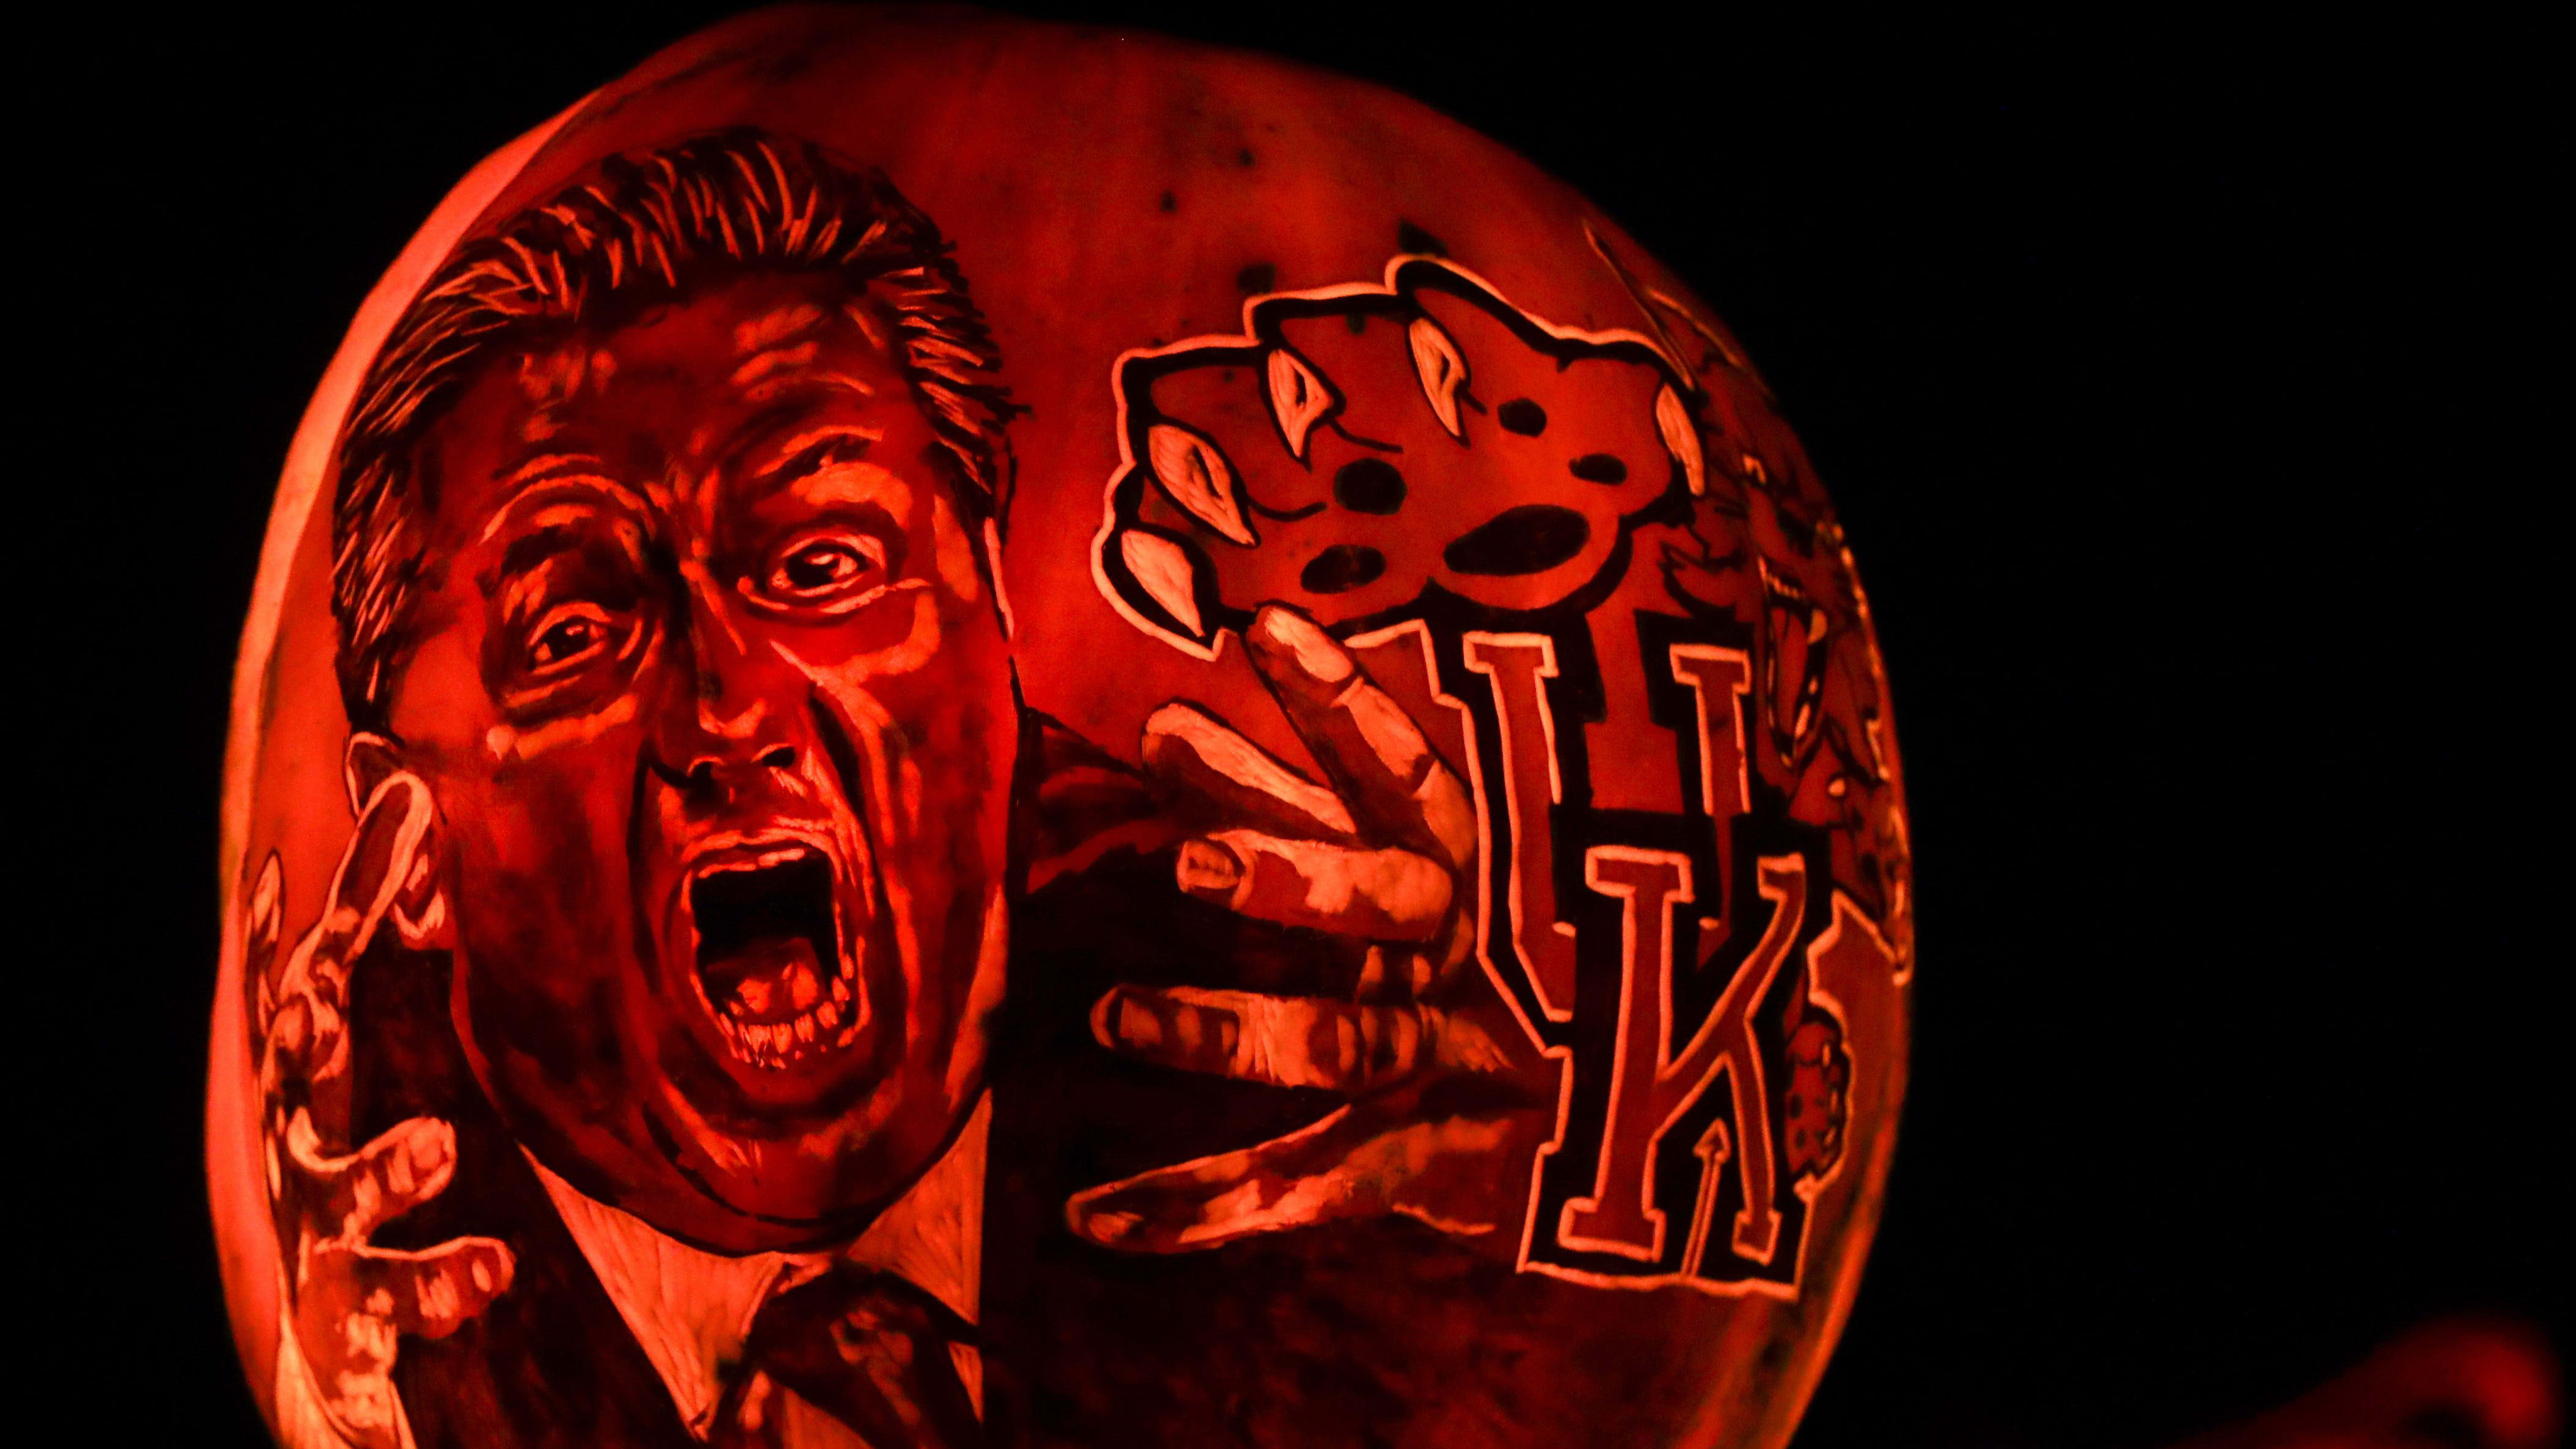 Kentucky's coach John Calipari appears on a pumpkin.